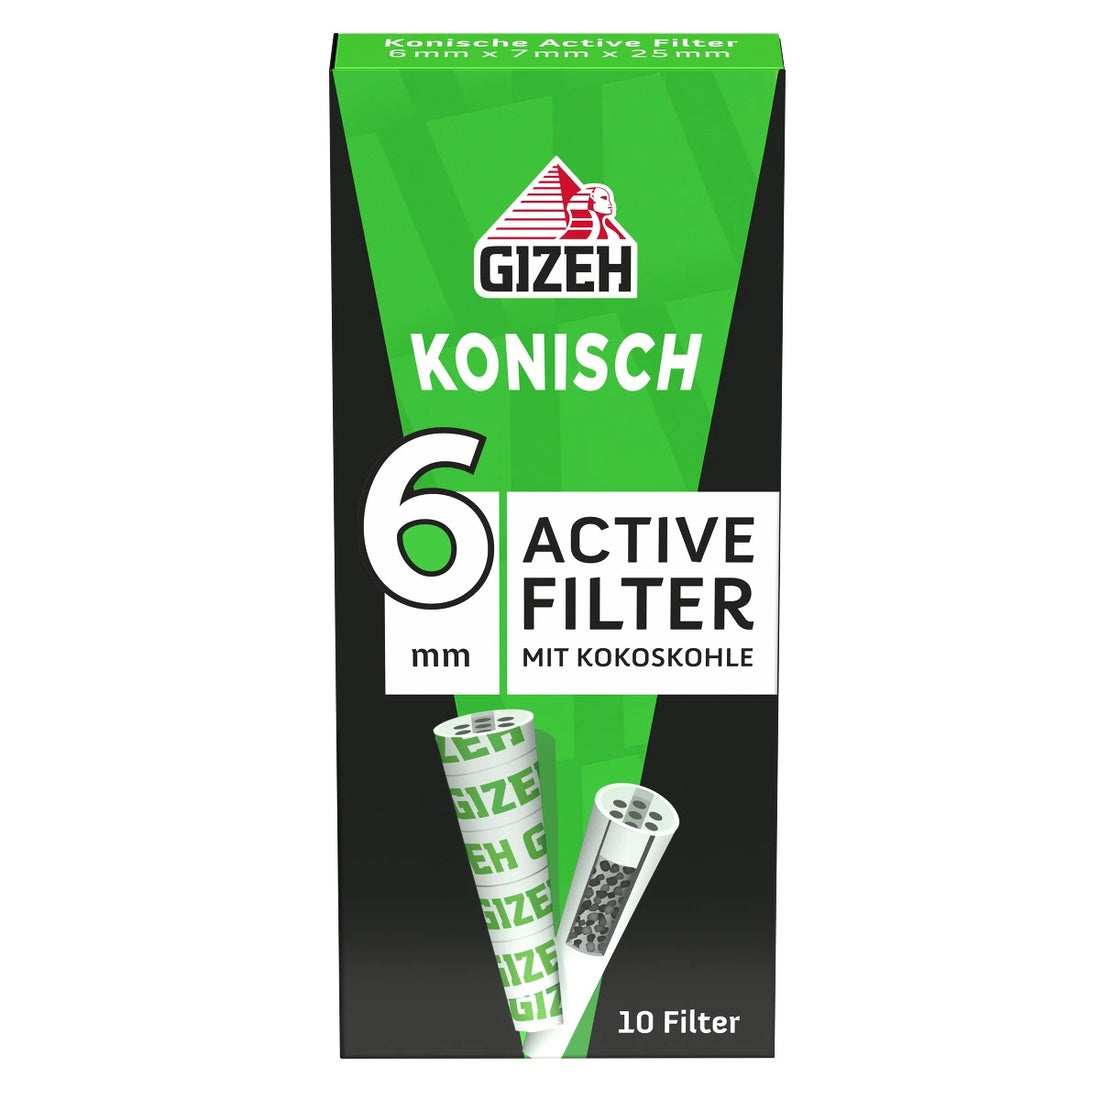 Gizeh Active Filter konisch 10 Stueck